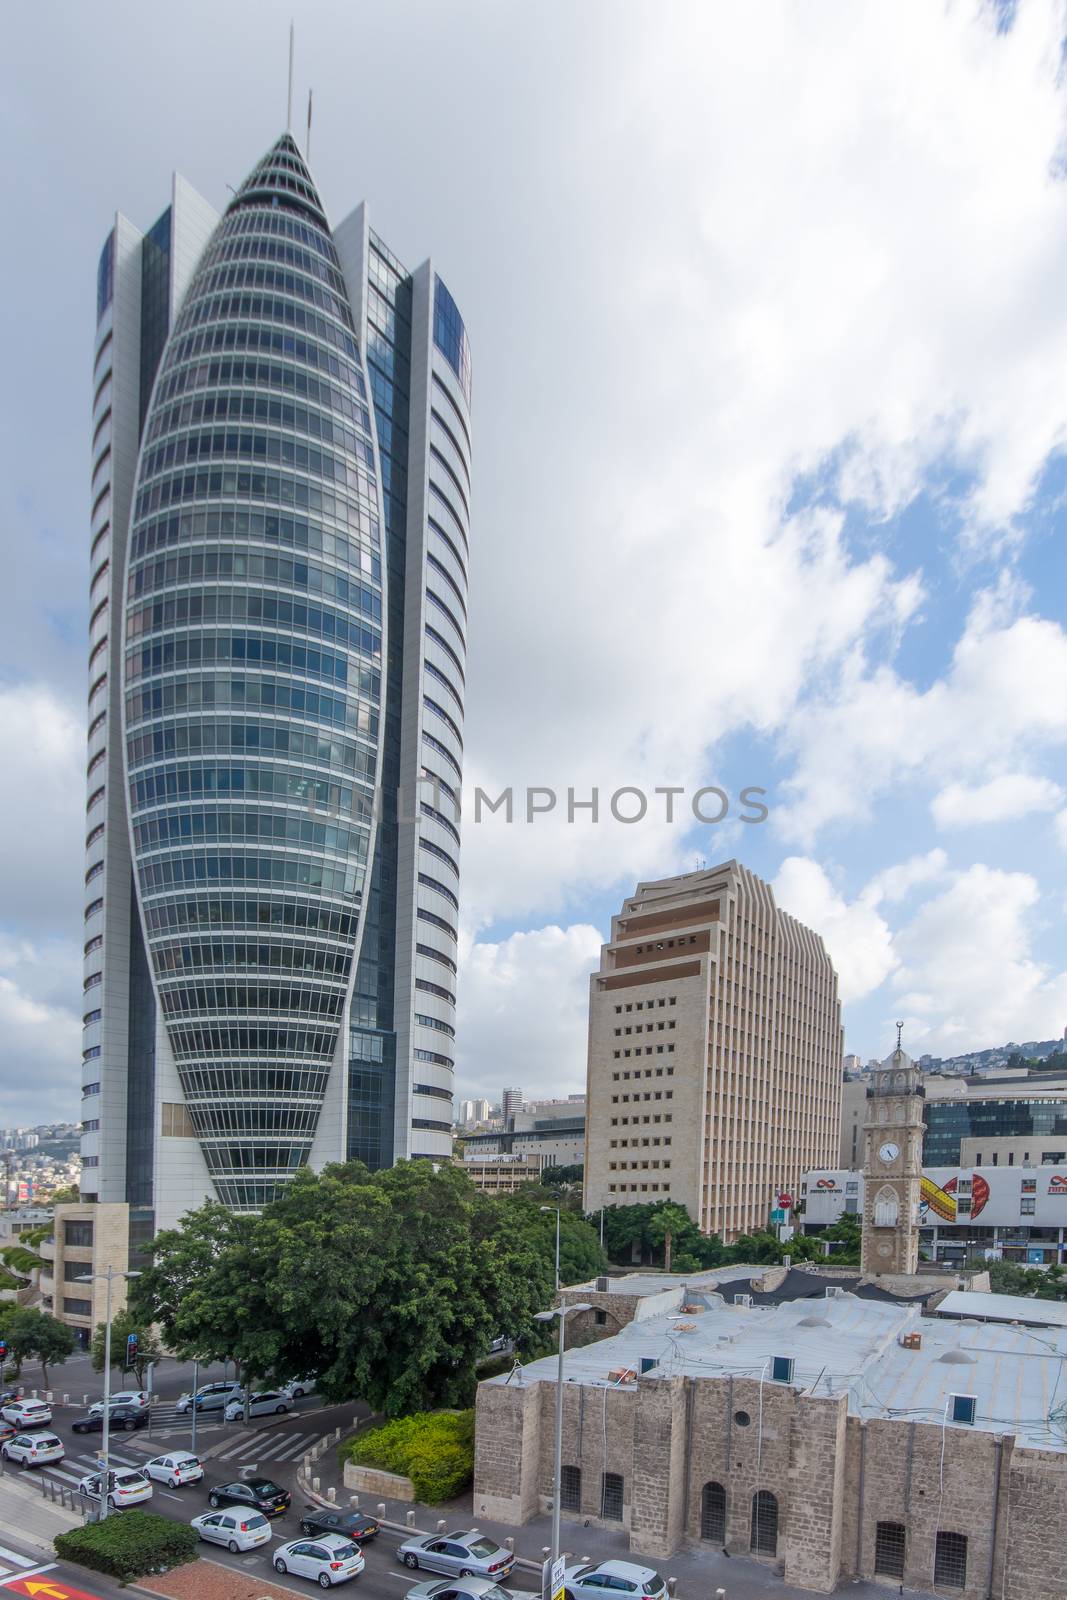 Downtown district of Haifa by RnDmS